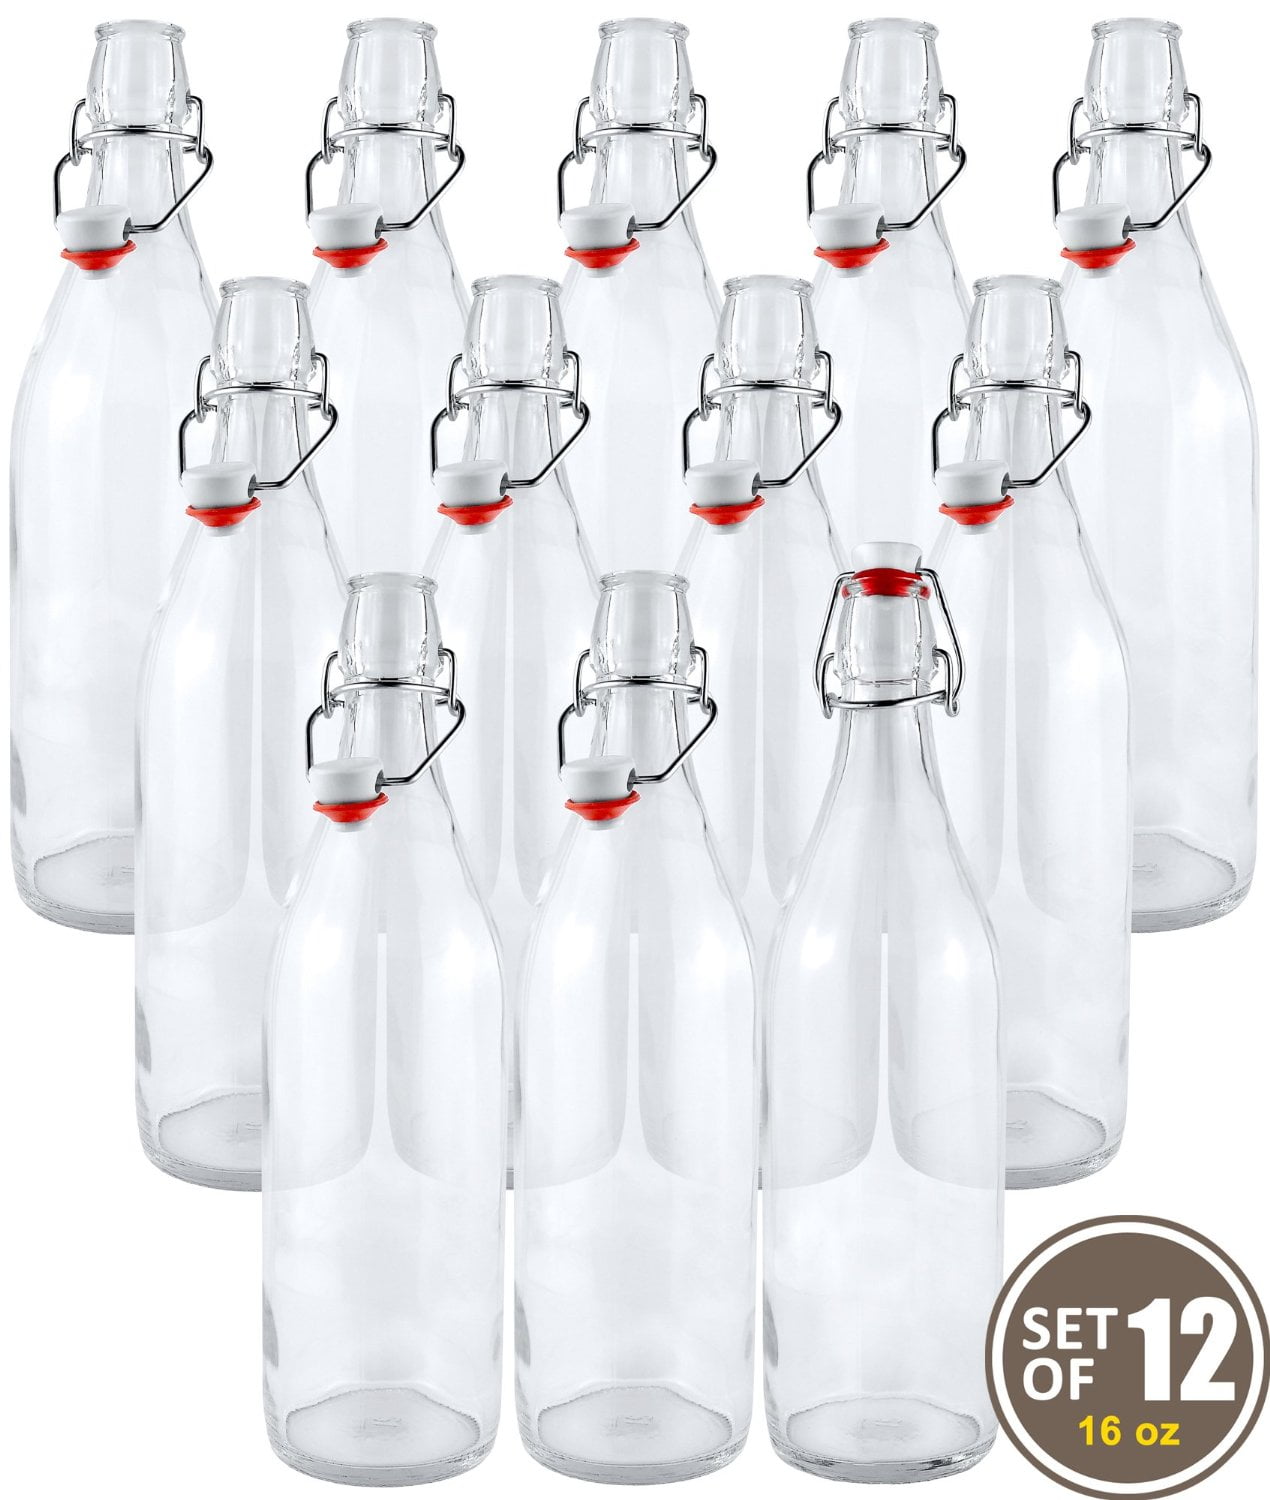 12 oz Clear Glass Bottles